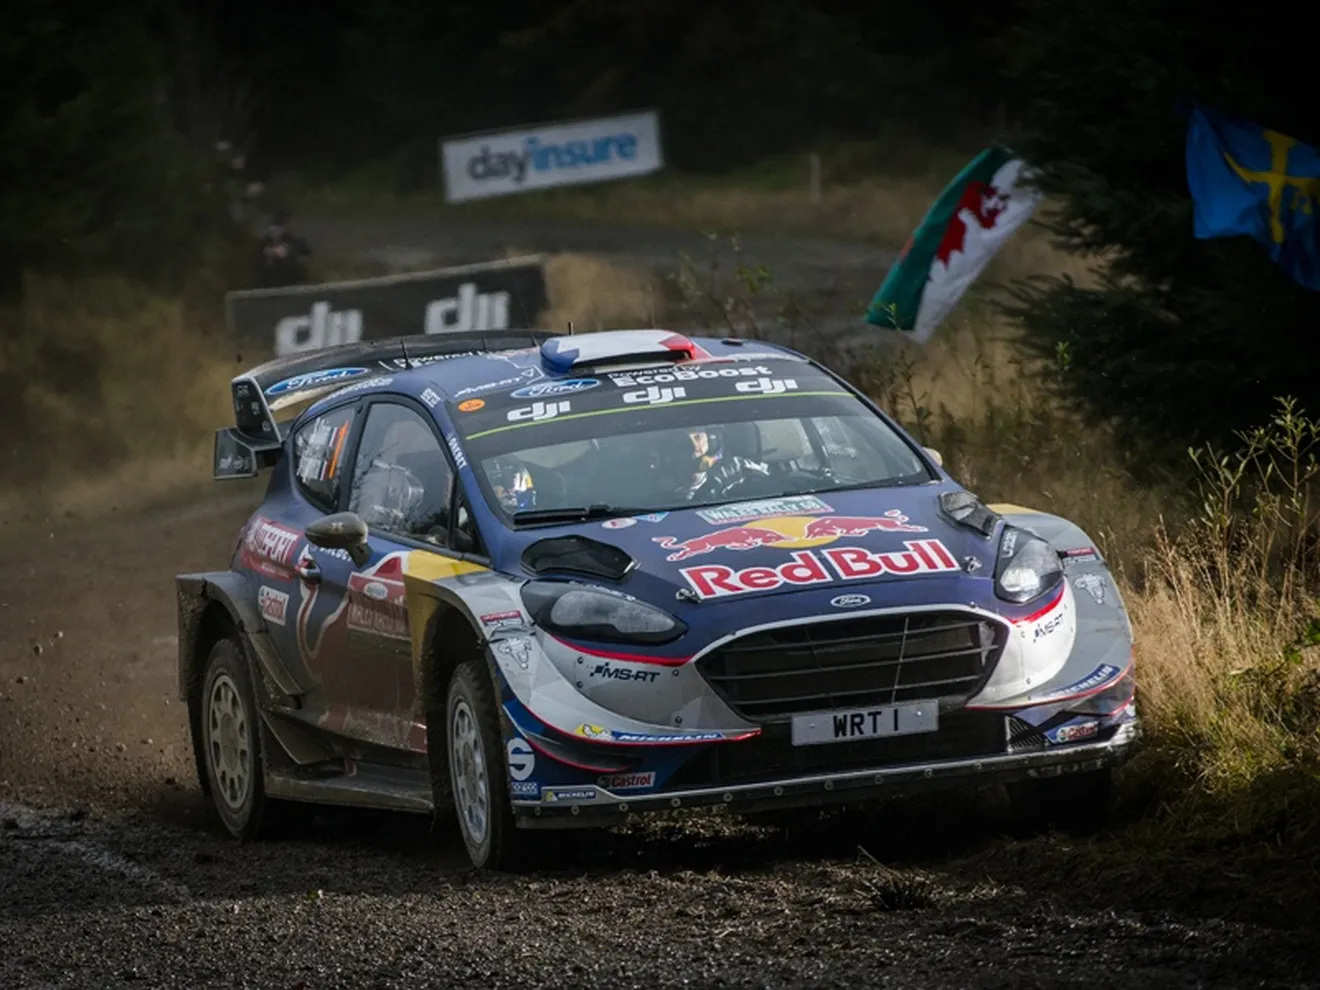 El nombre de Ford vuelve a estar ligado al WRC en 2018